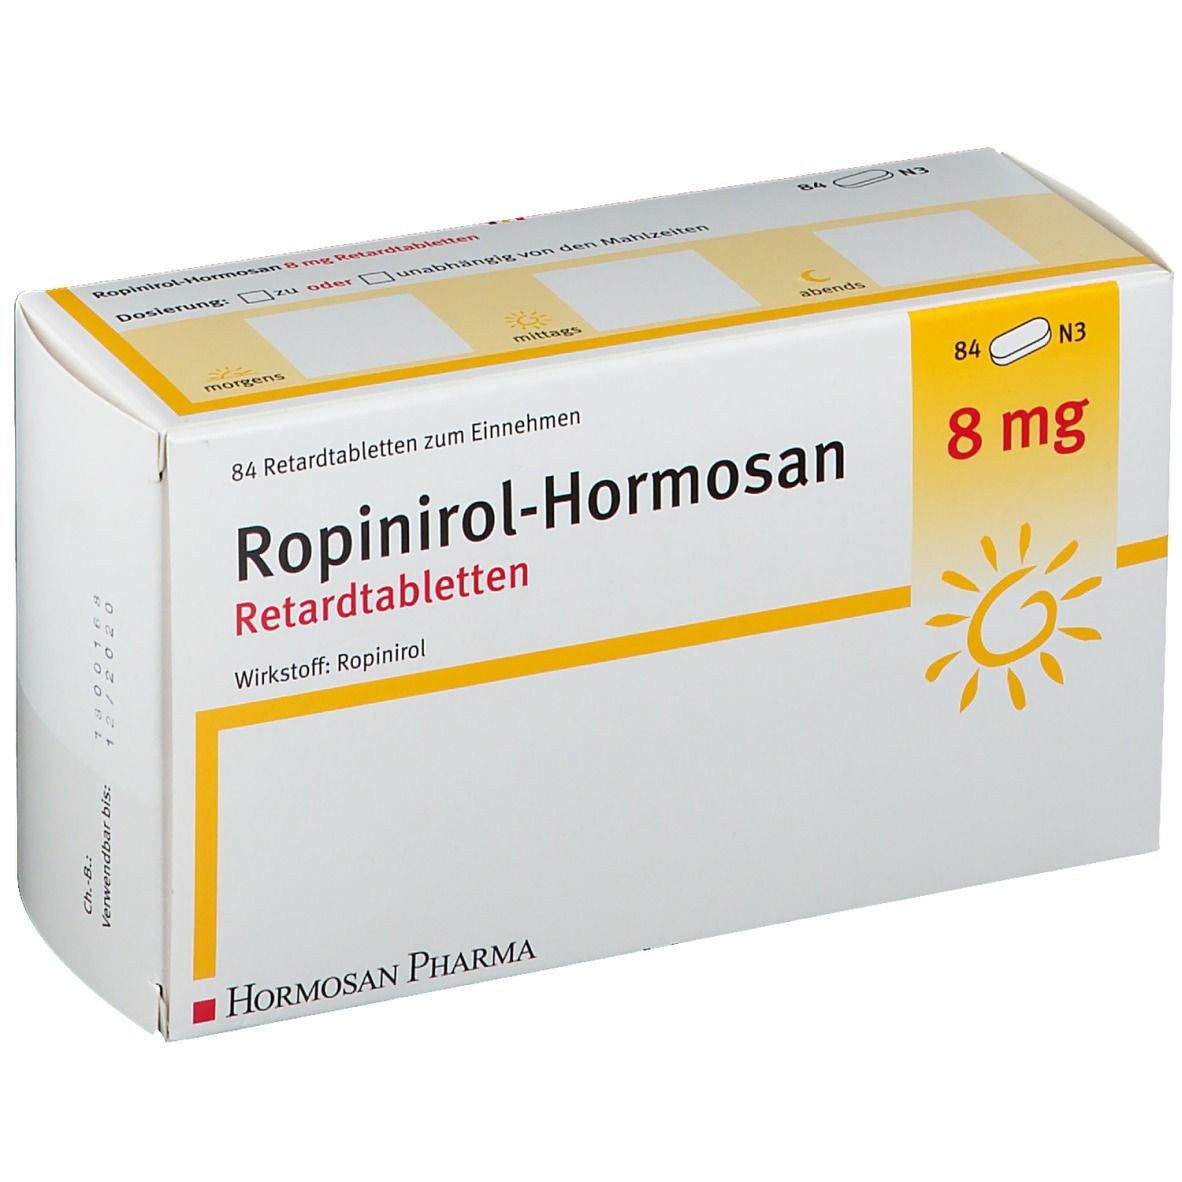 Ropinirol-Hormosan 8 mg